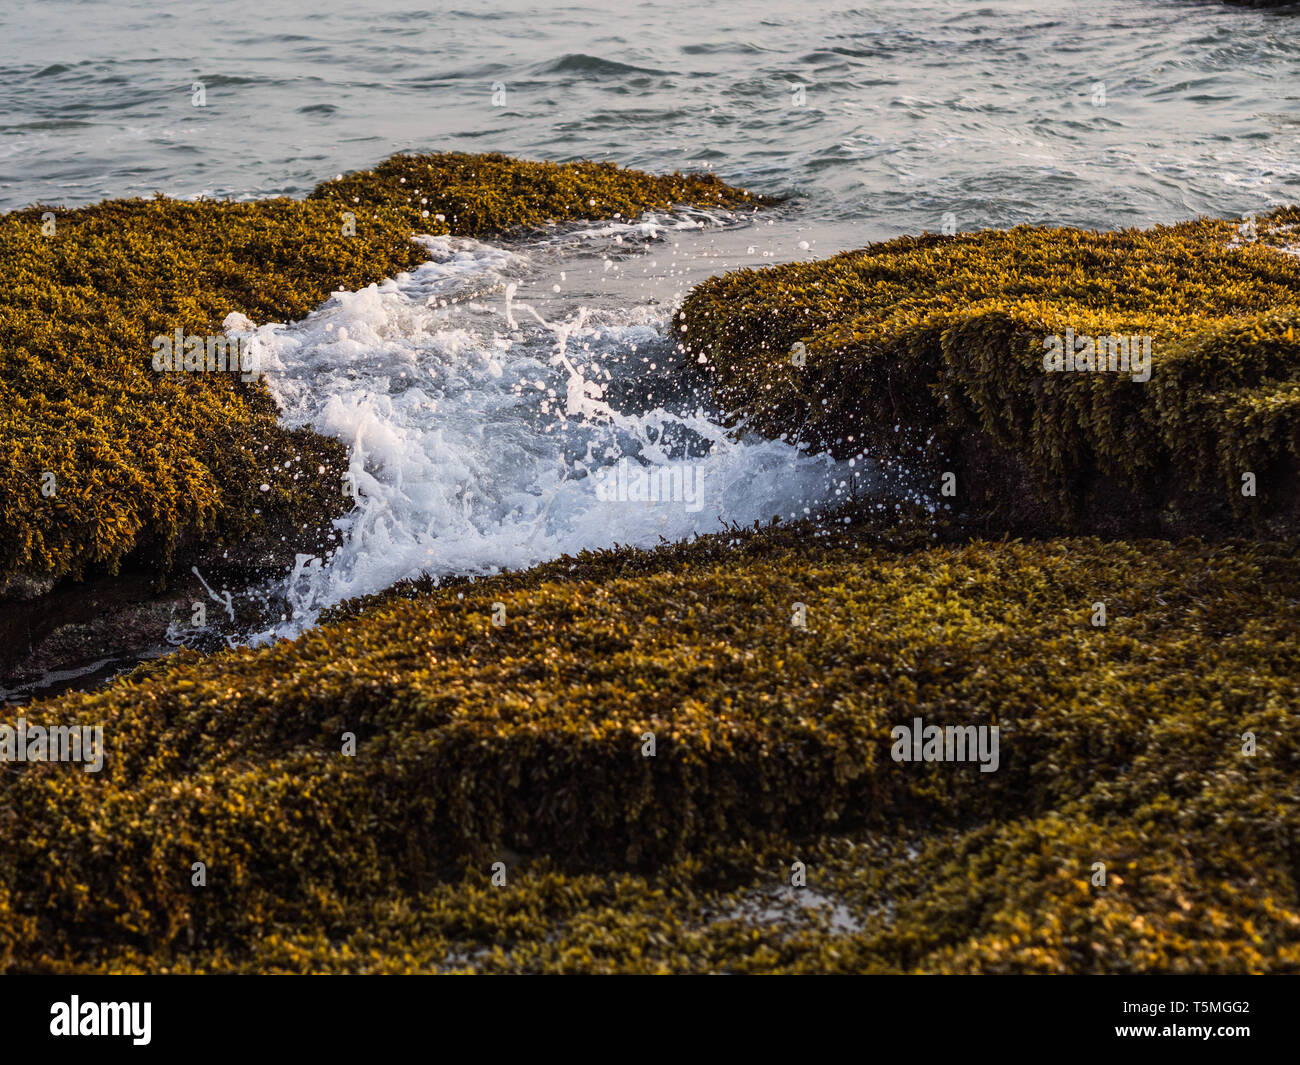 The underwater stones overgrown with algae. Waves hit the stones and spray Stock Photo